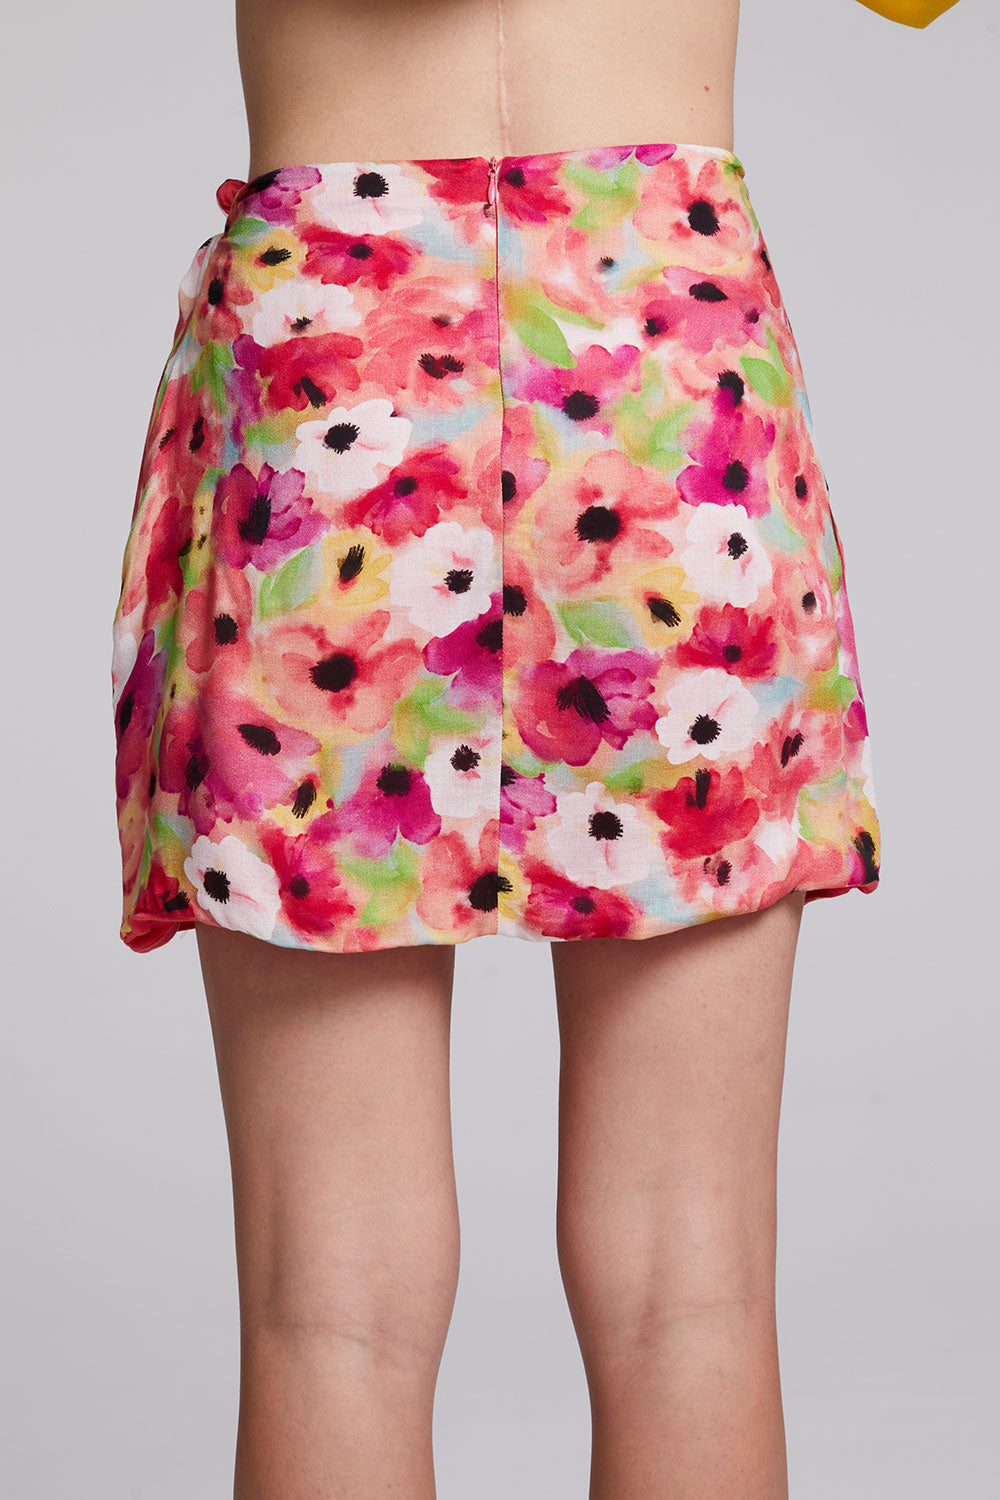 Elena Poppy Floral Mini Skirt WOMENS chaserbrand